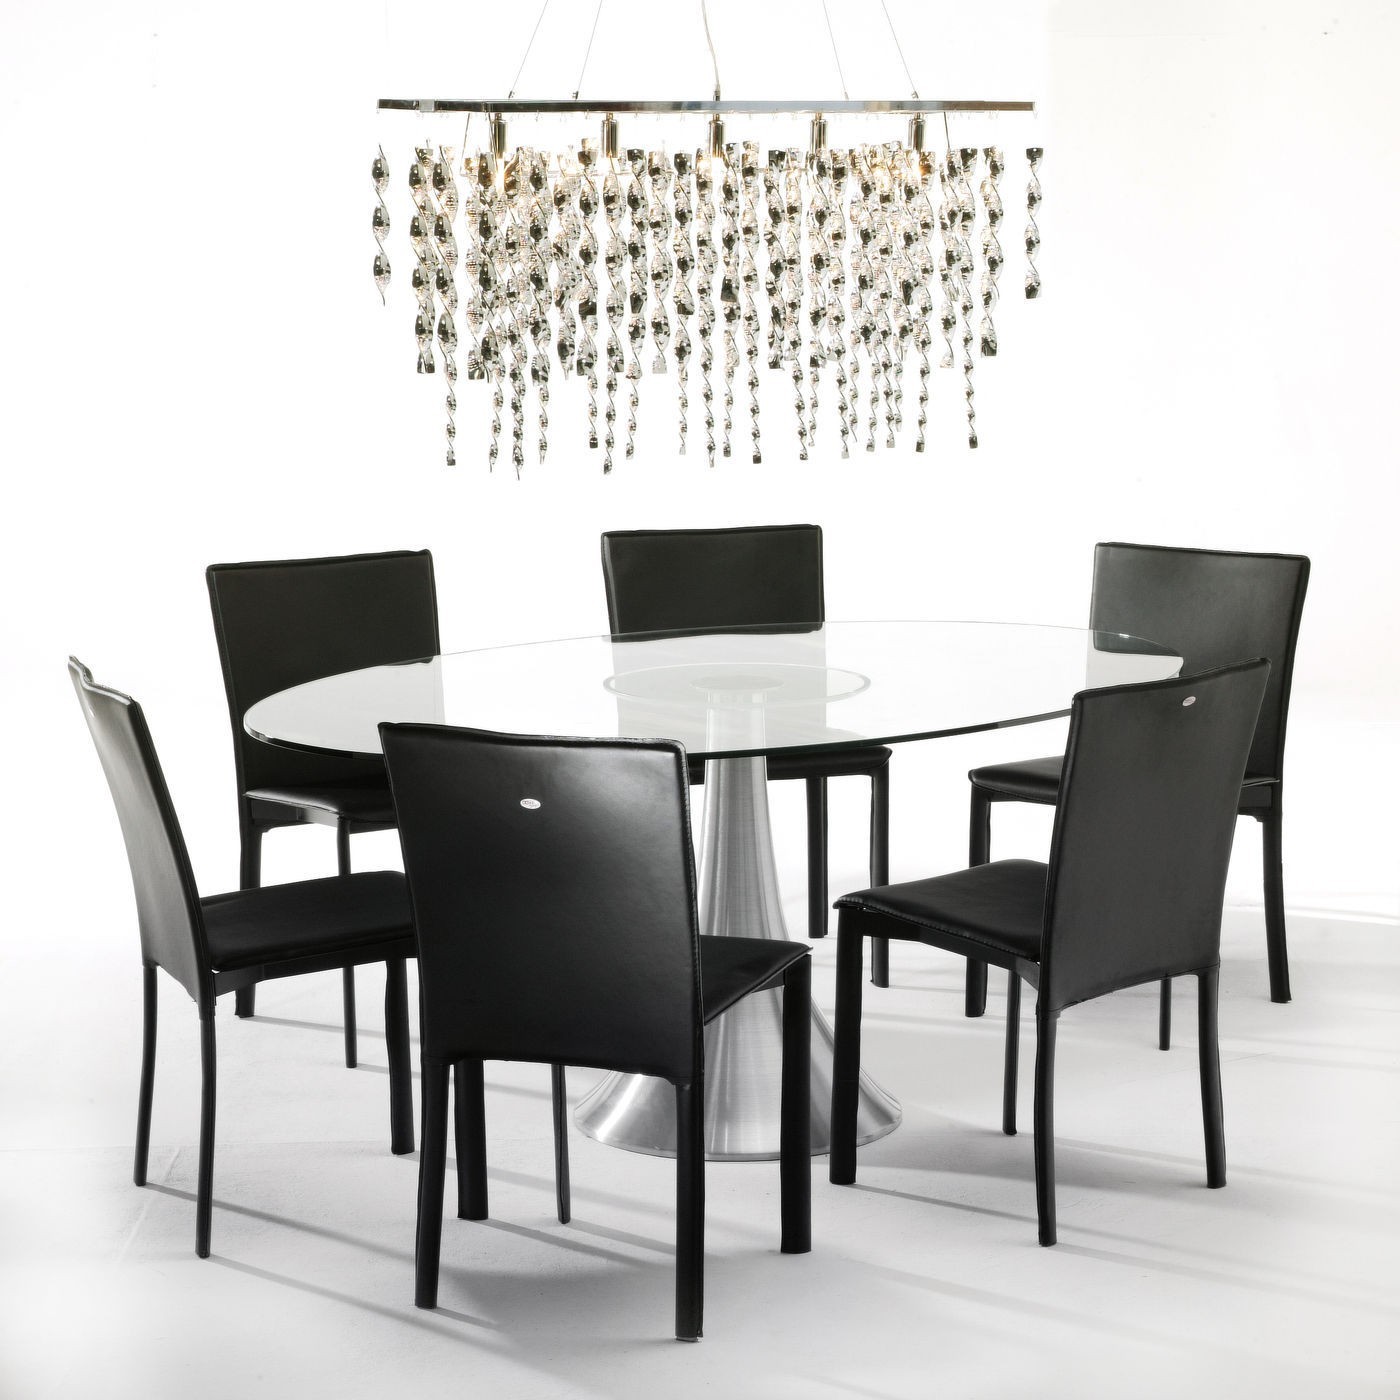 Table en verre Grande Possibilita 180x120cm chromée et verre Kare Design